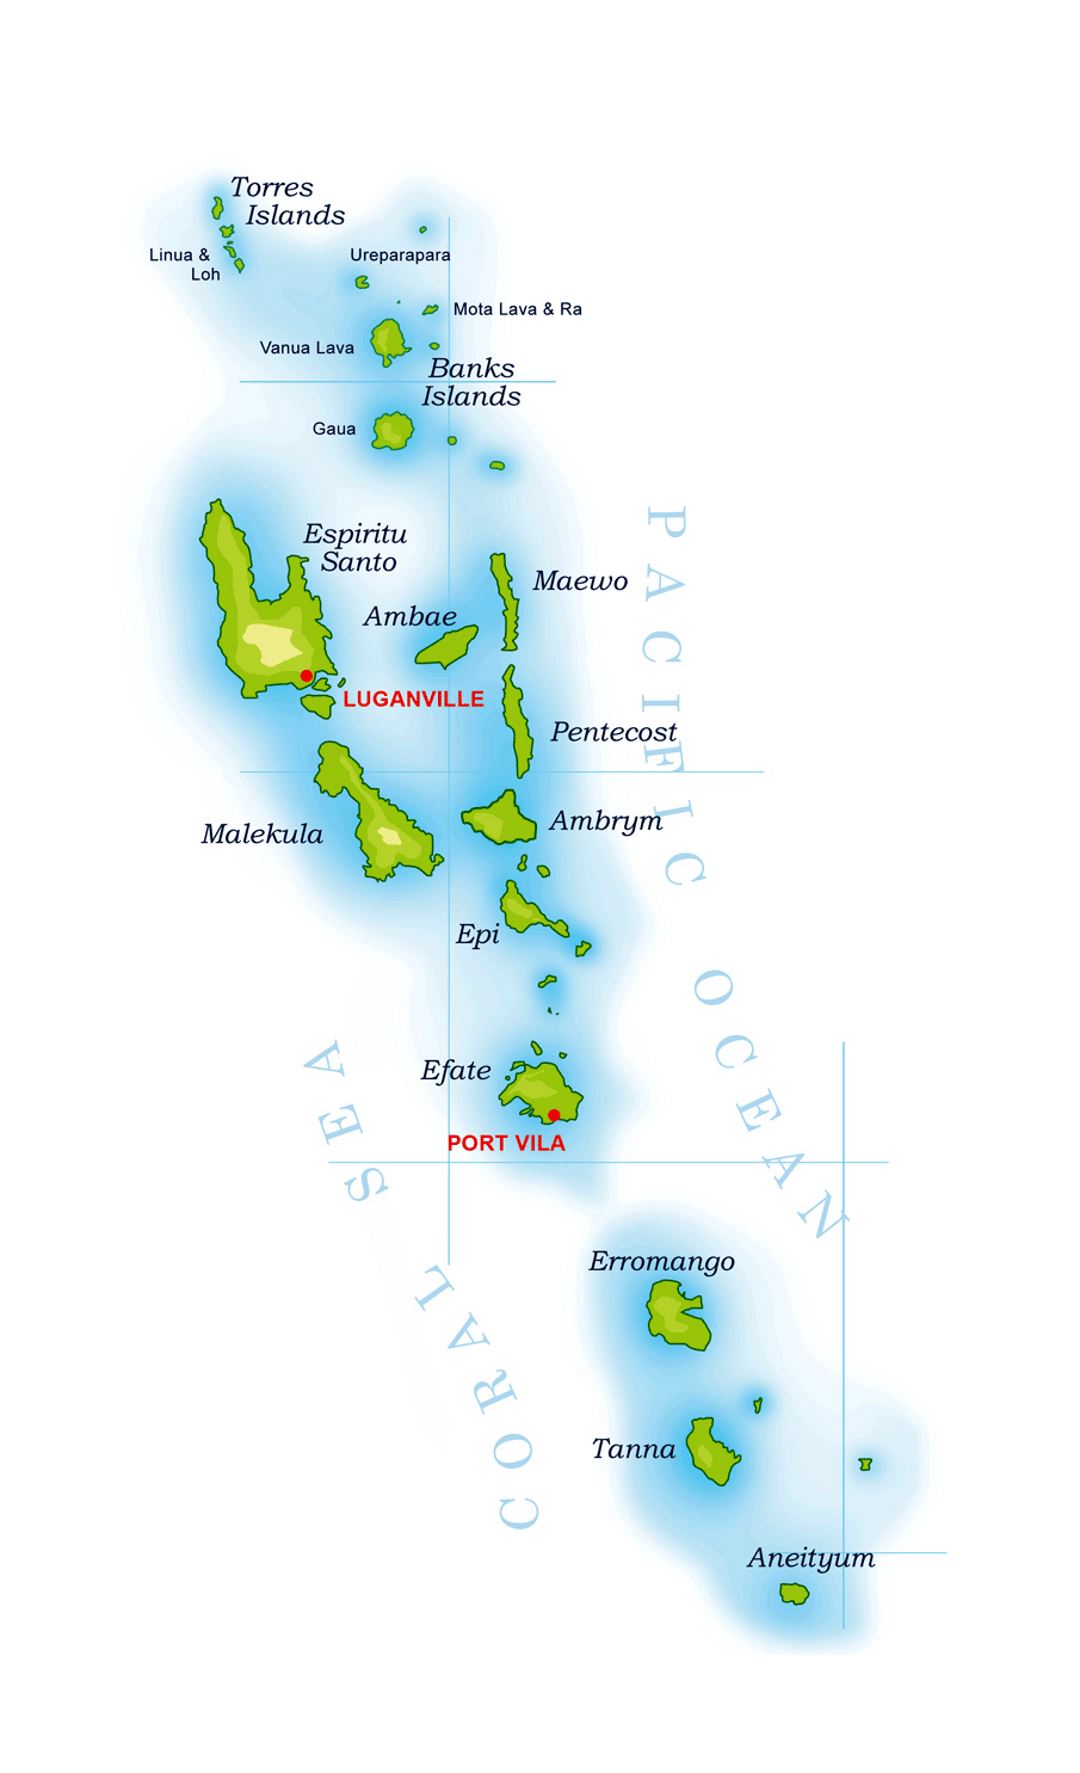 Detailed elevation map of Vanuatu